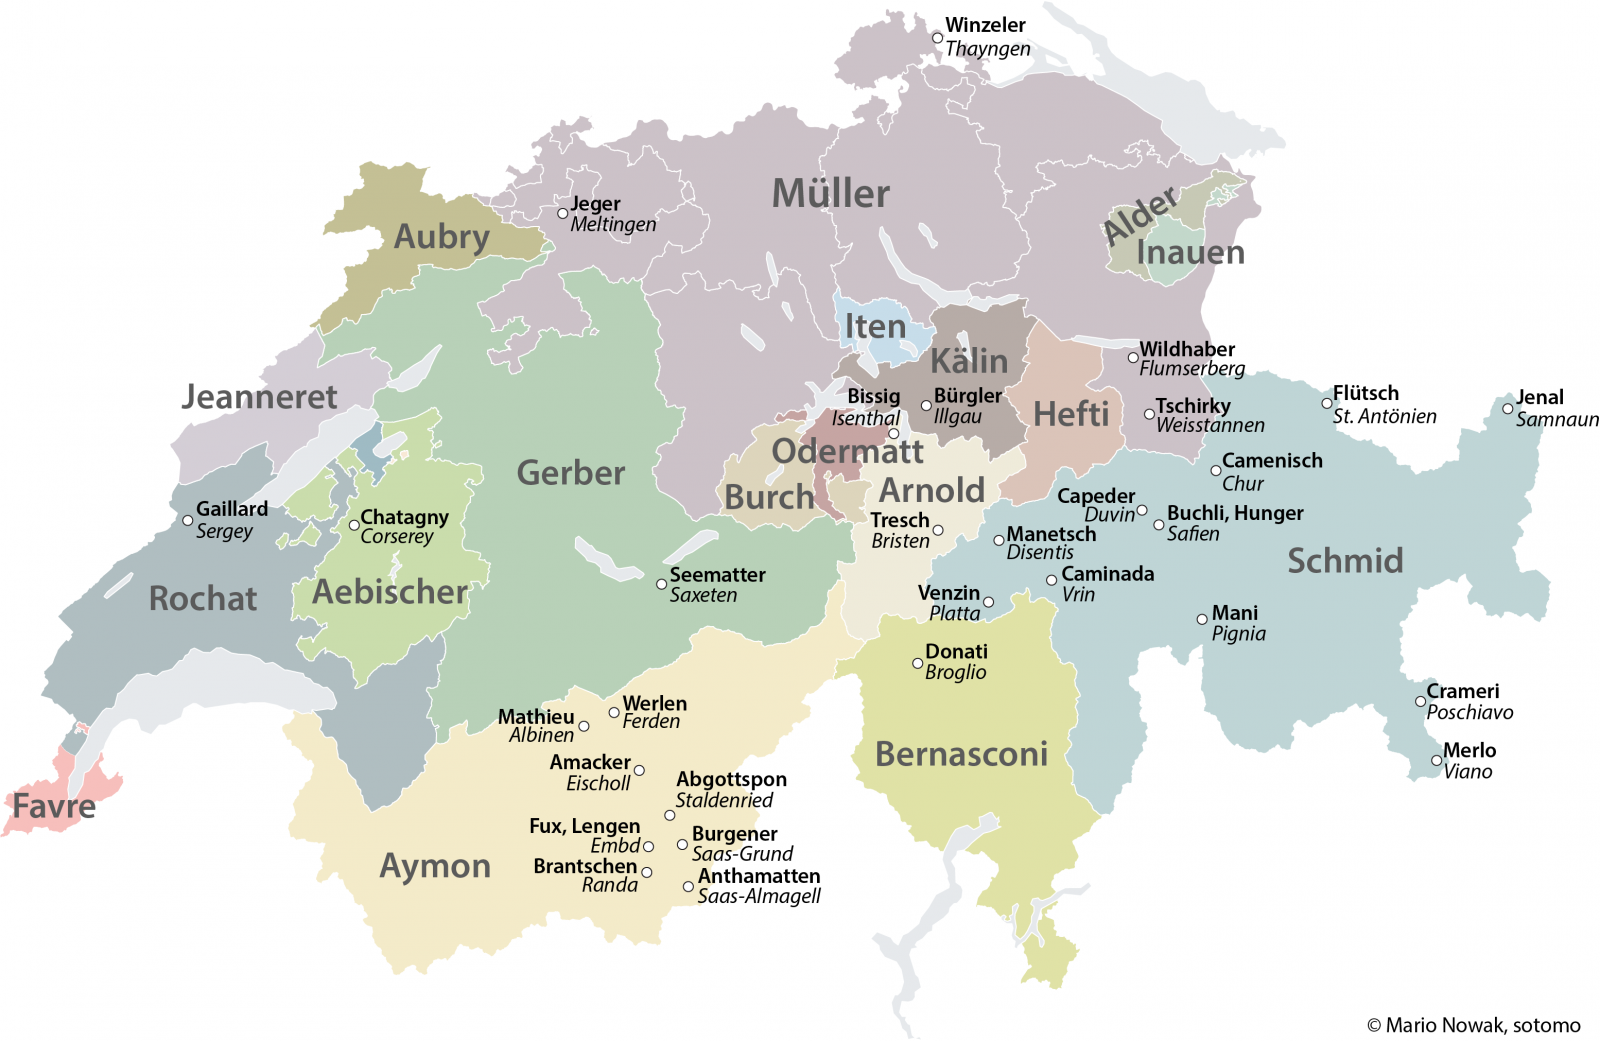 Popular Swiss surnames